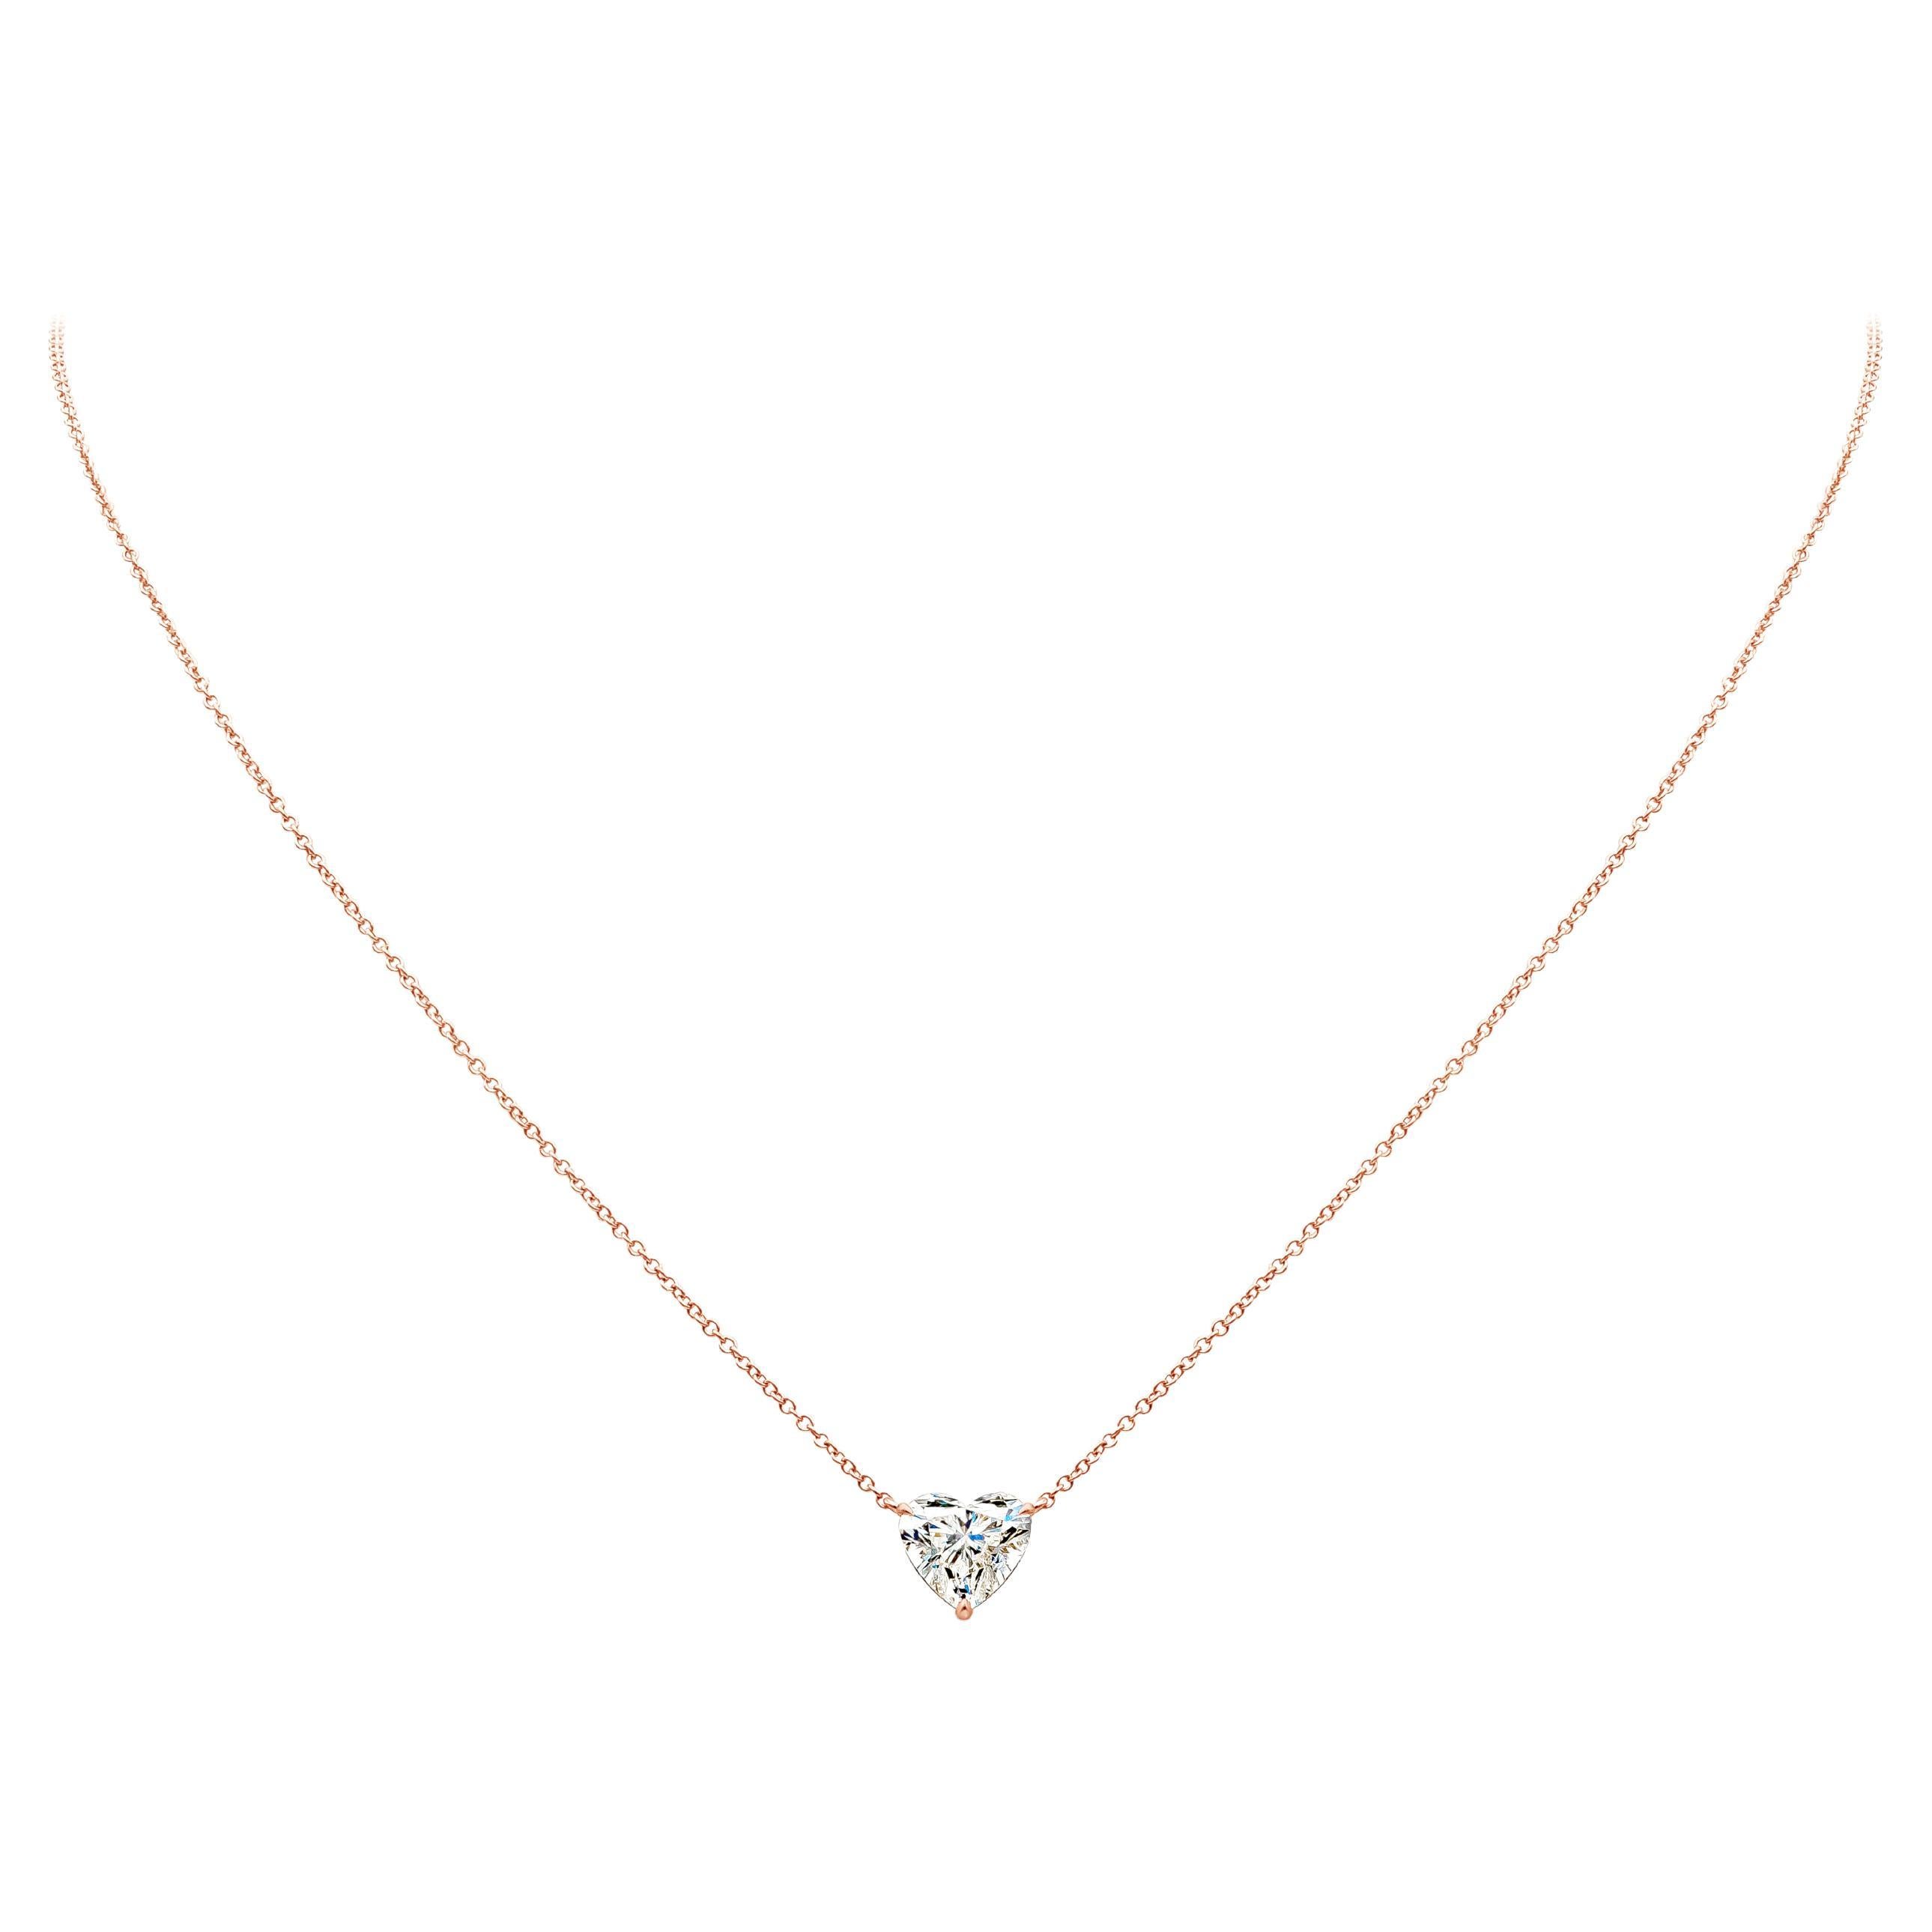 Roman Malakov GIA Certified 1.53 Carat Heart Shape Diamond Pendant Necklace